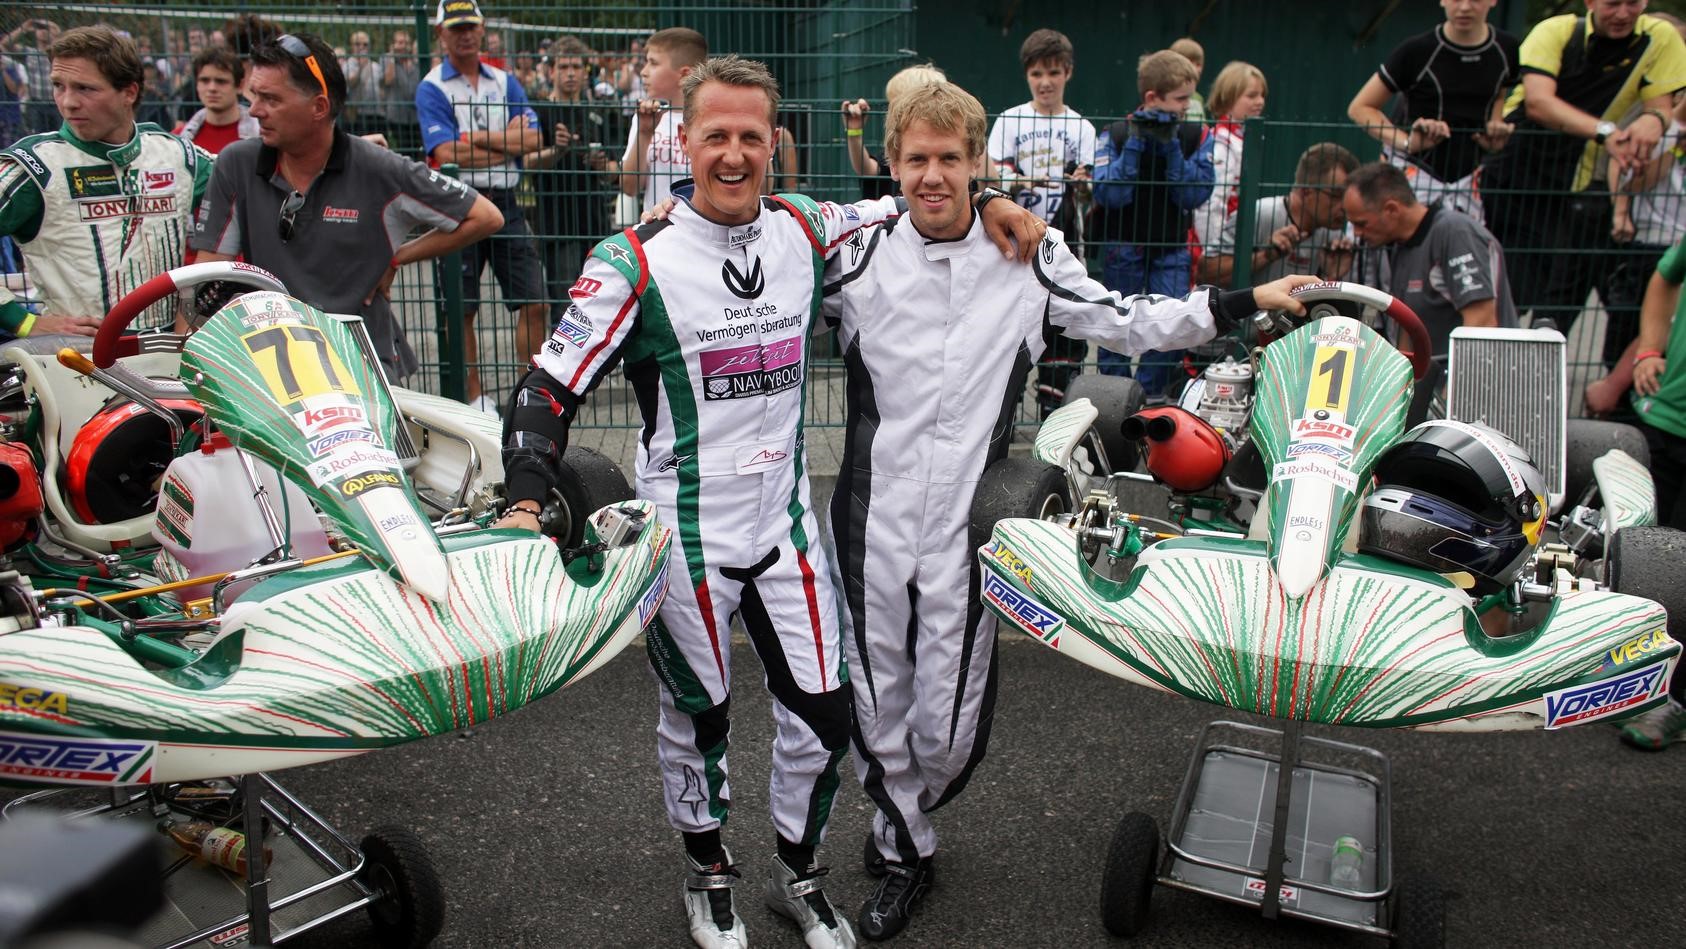 Michael Schumacher and Sebastian Vettel with their karts.